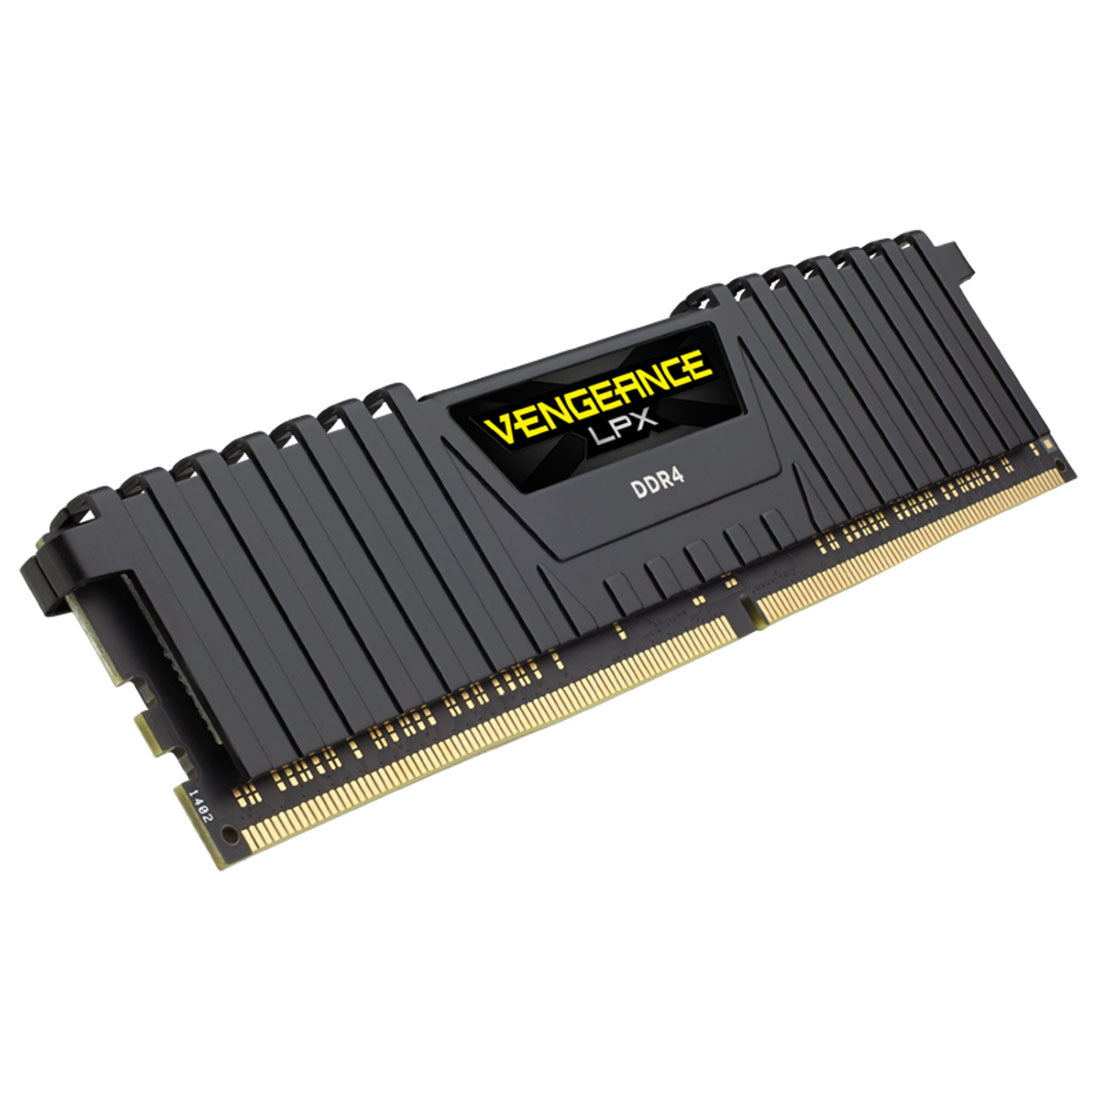 Corsair Vengeance LPX RAM 16GB DDR4 RAM 3200MHz Desktop Memory